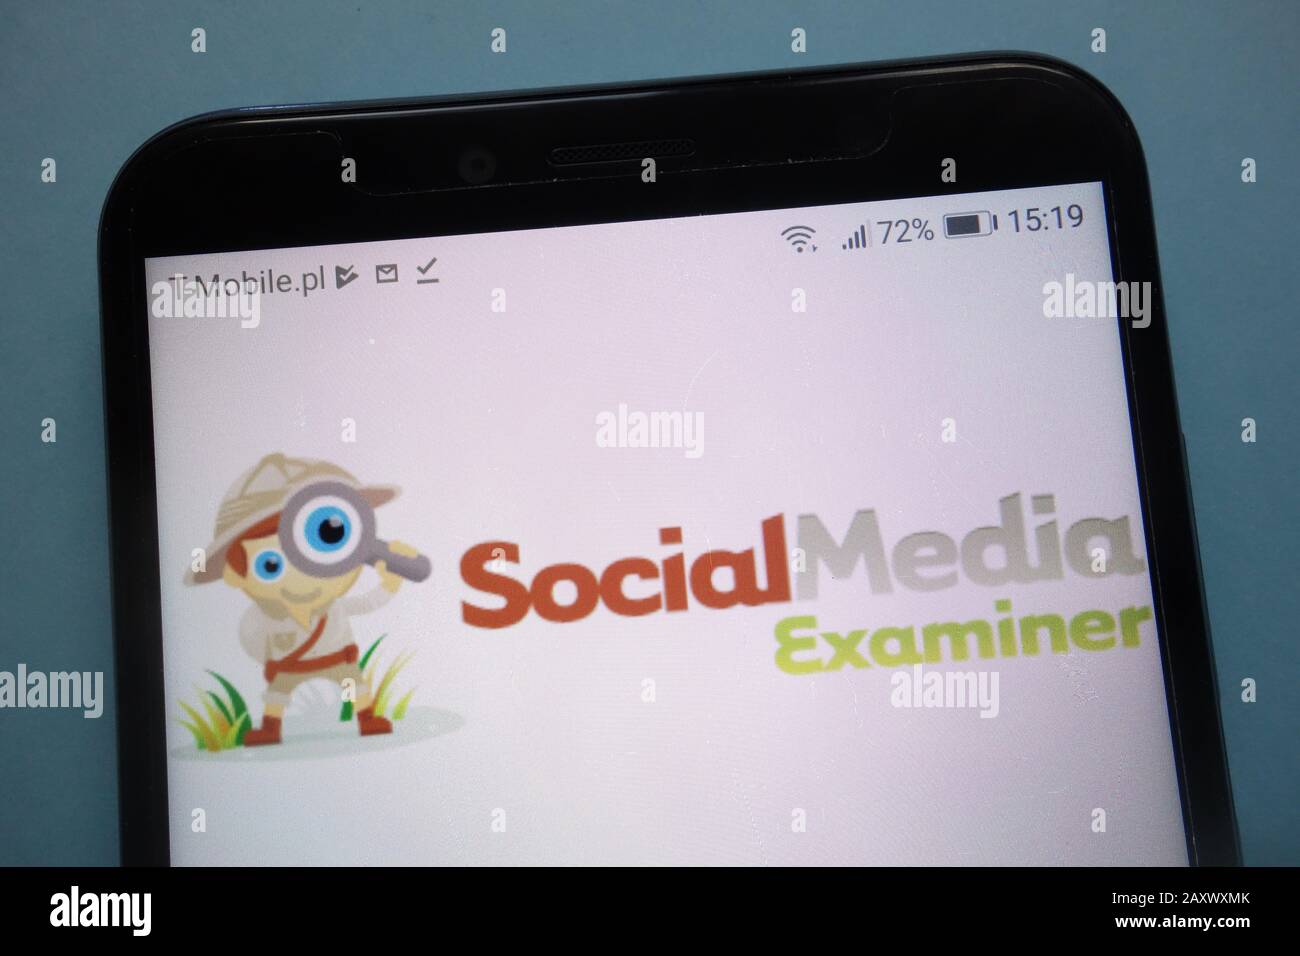 Social Media Examiner logo displayed on smartphone Stock Photo